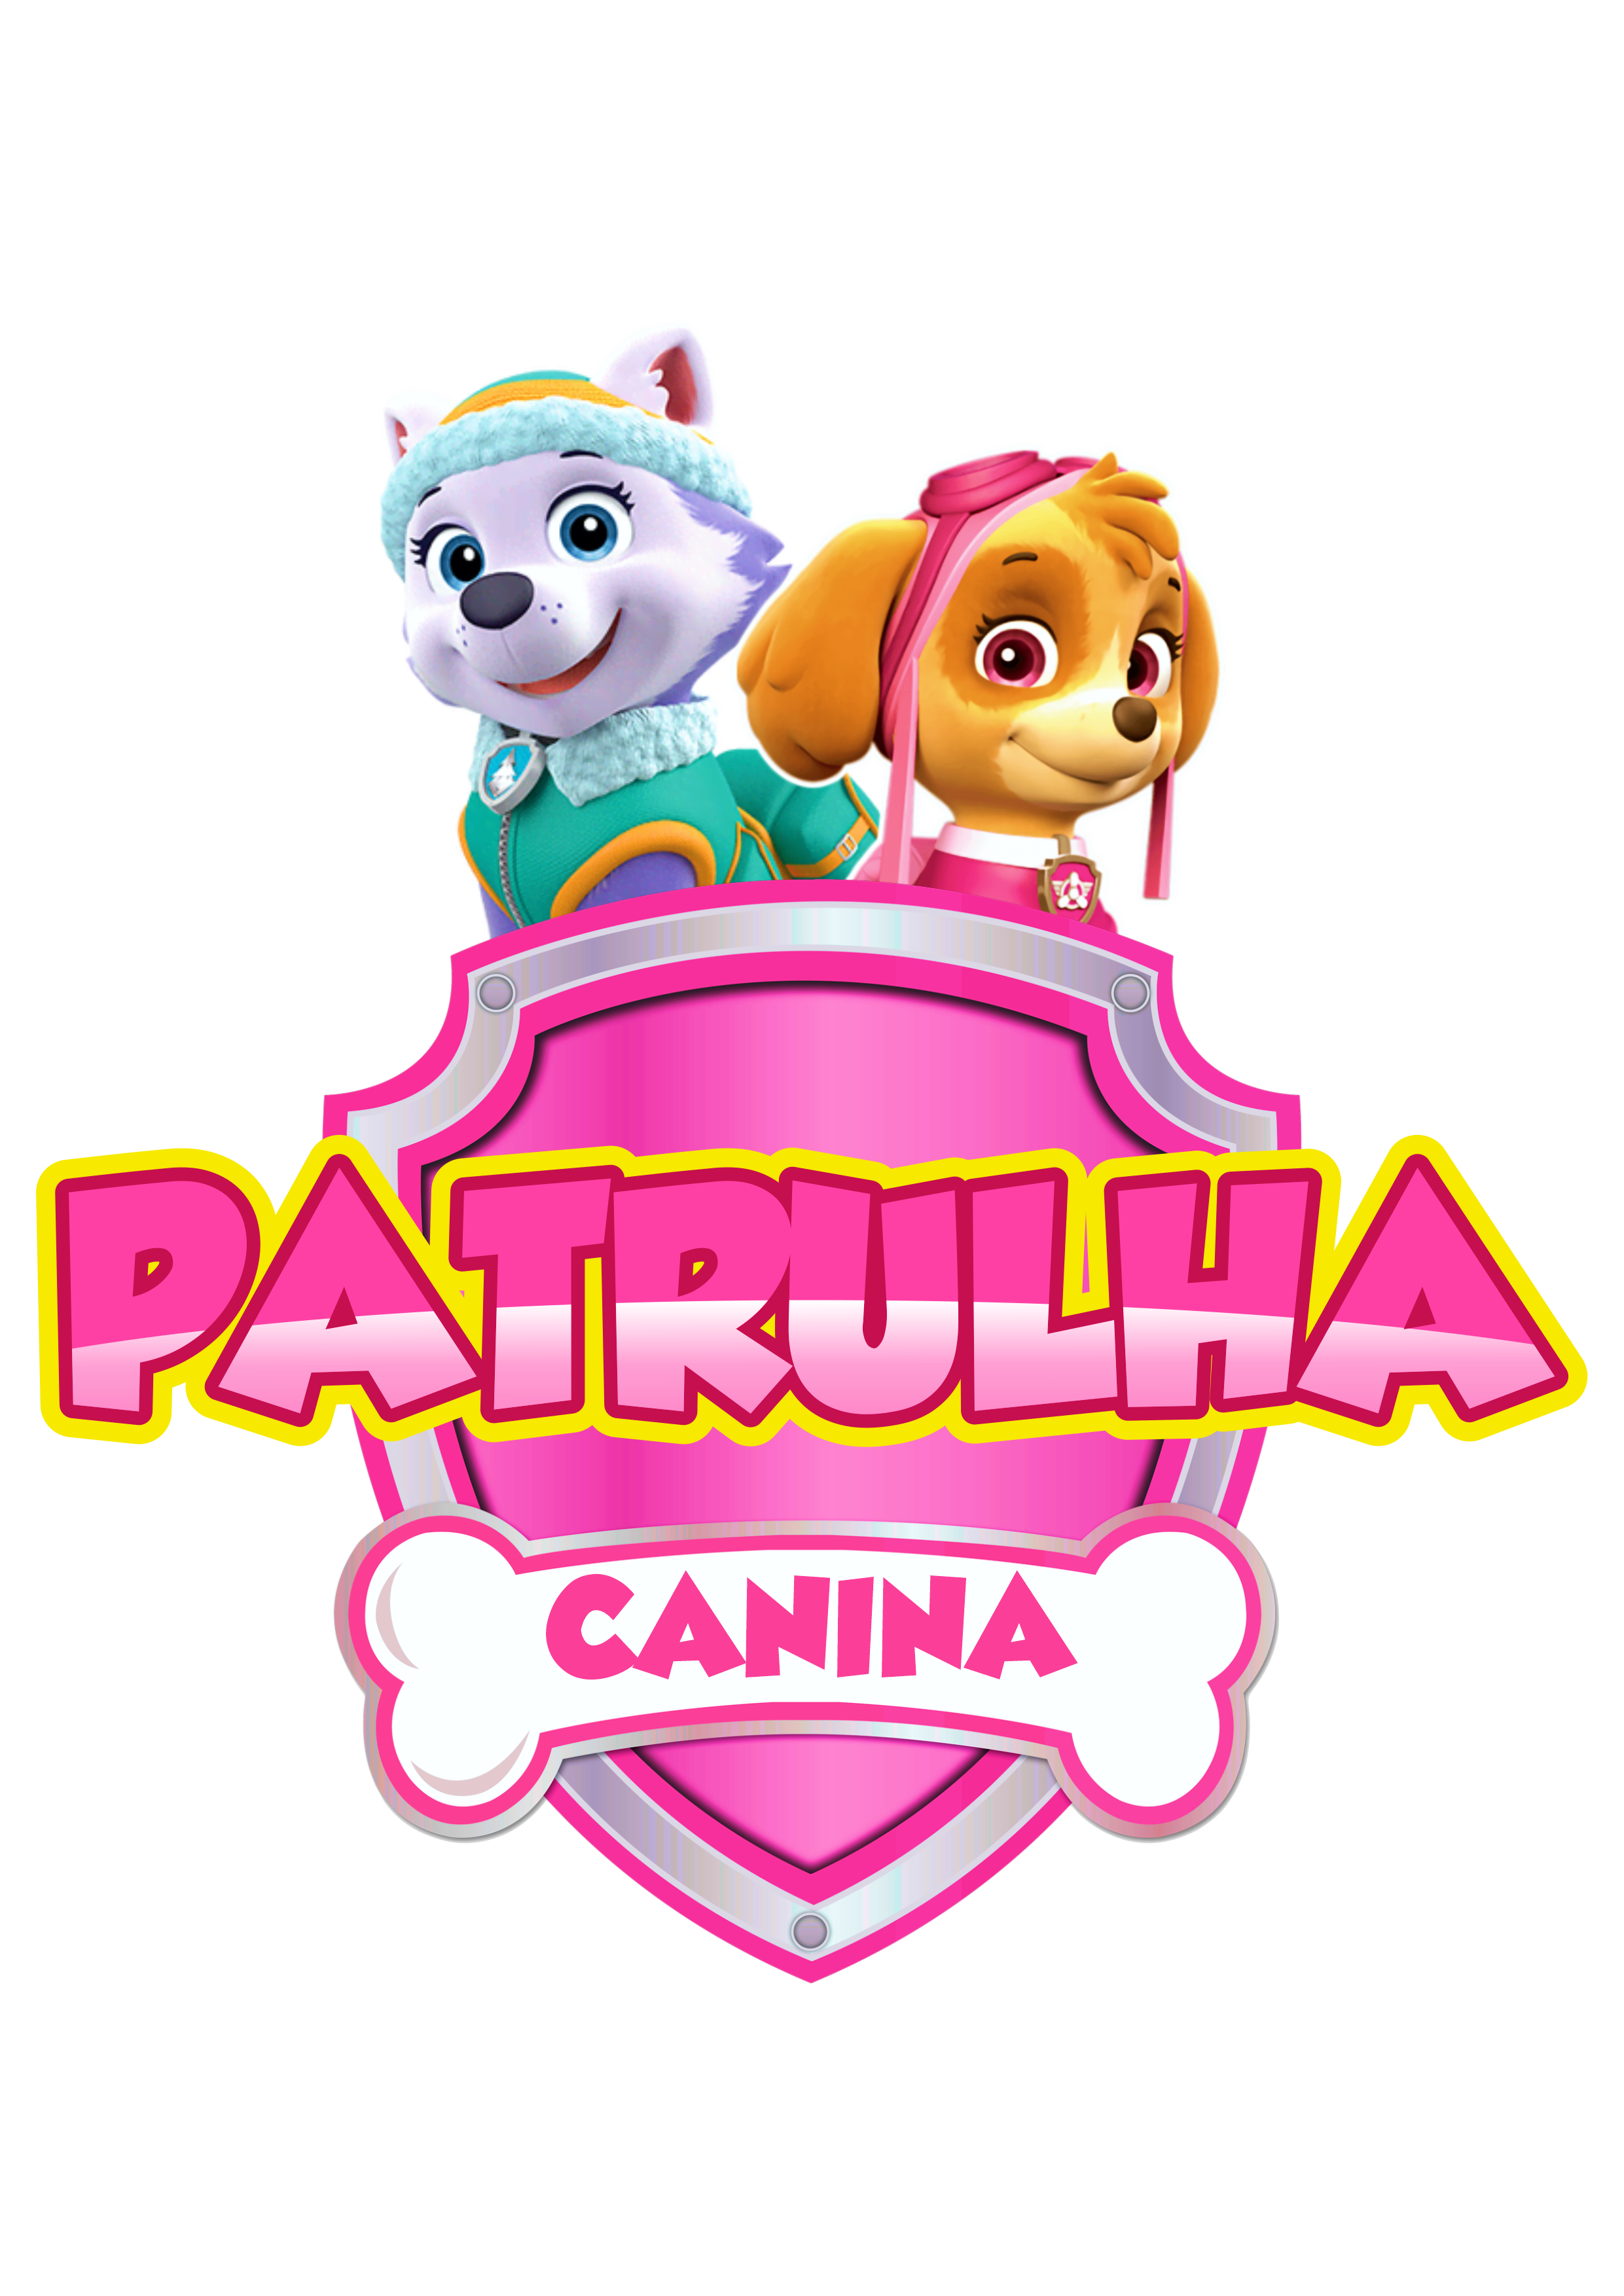 Patrulha canina rosa pink paw patrol desenho animado logomarca logo papelaria Skye e Everest png